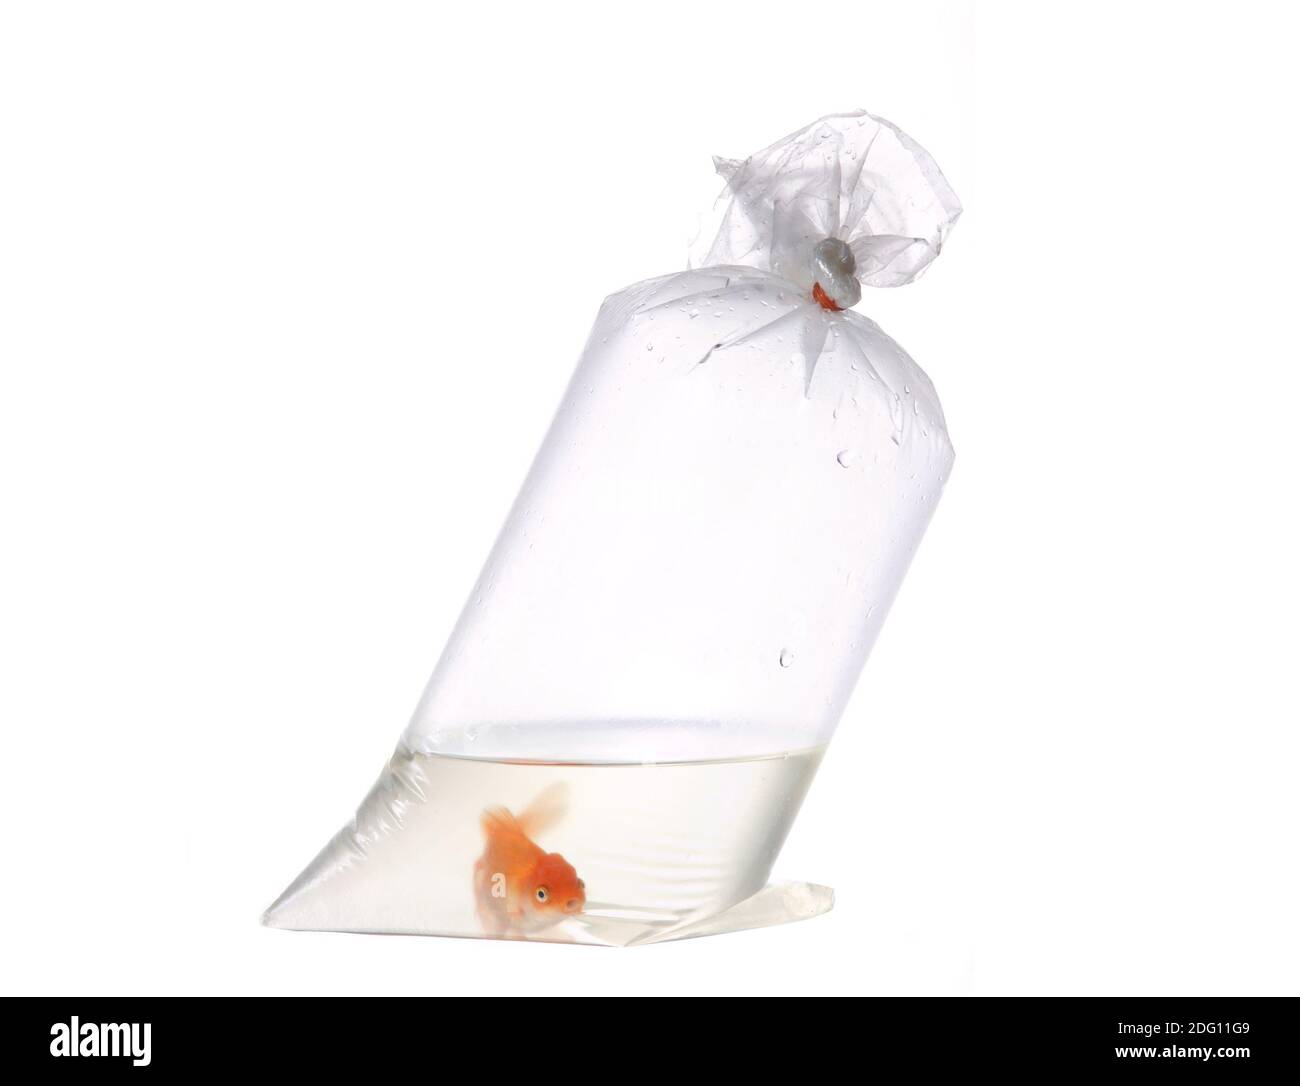 Gold fish in plastic bag Stock Photo - Alamy